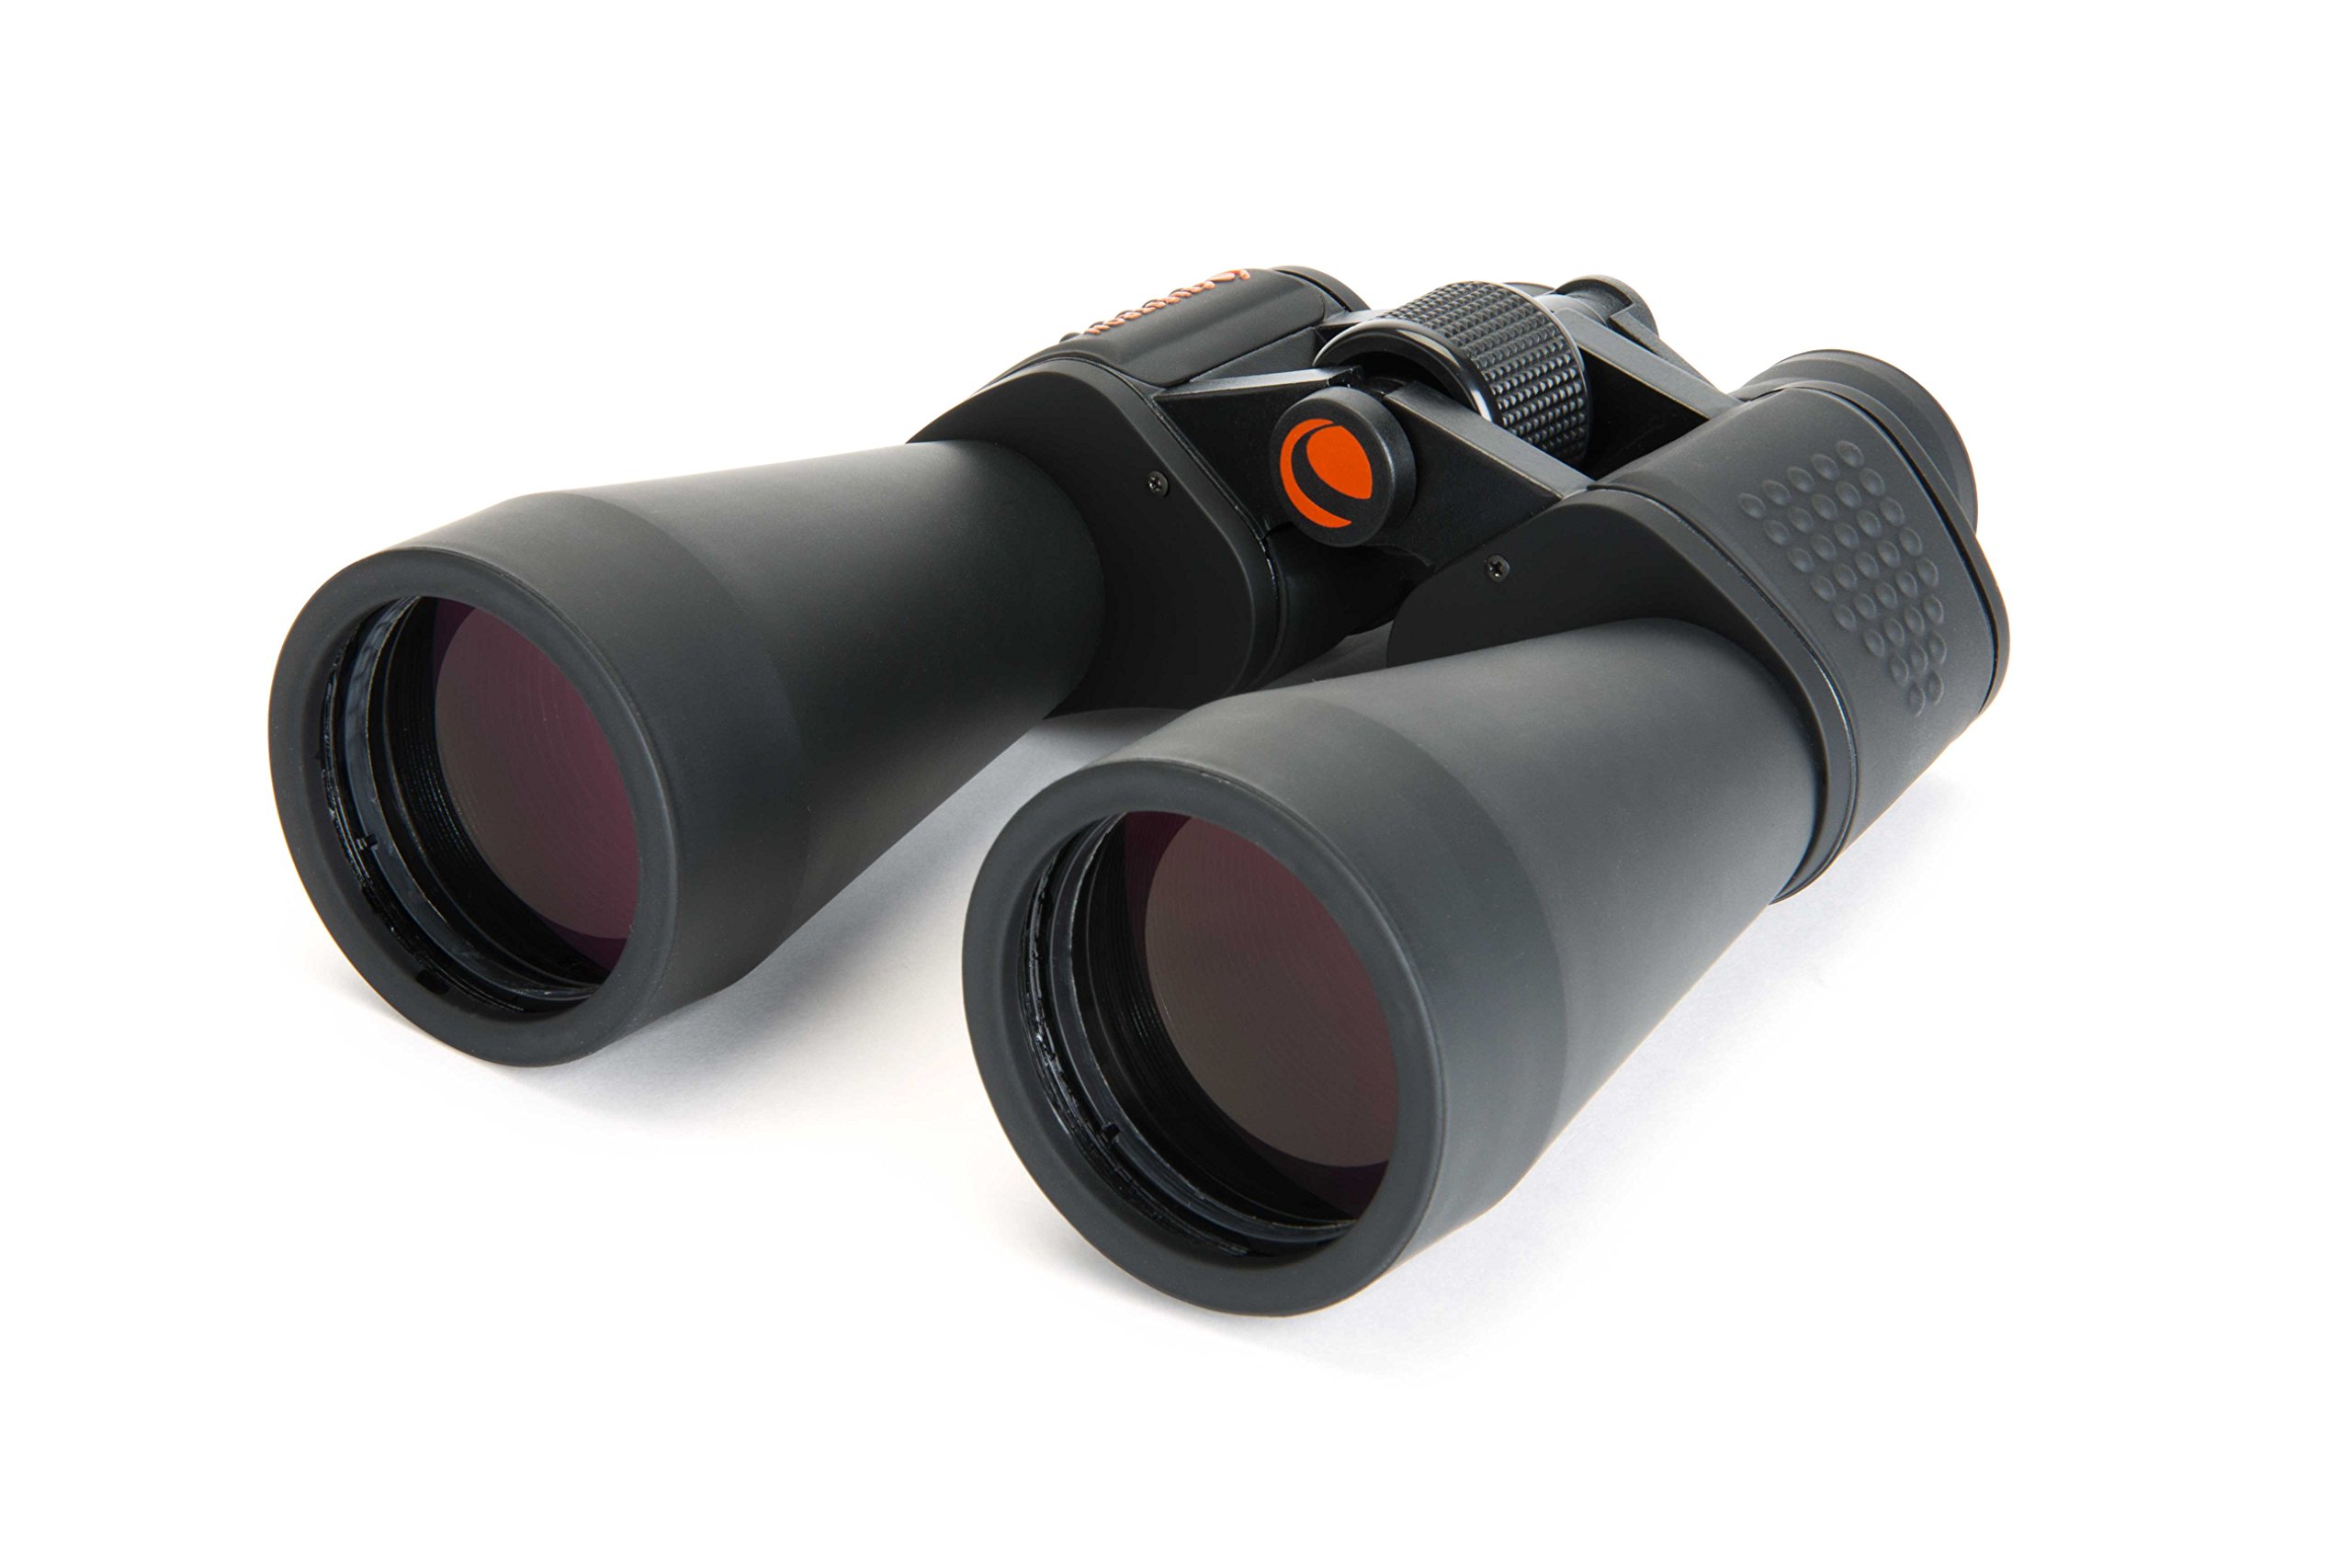 Celestron - SkyMaster 12x60 Binocular - Large Aperture Binoculars with 60mm Objective Lens - 12x Magnification High Powered Bino